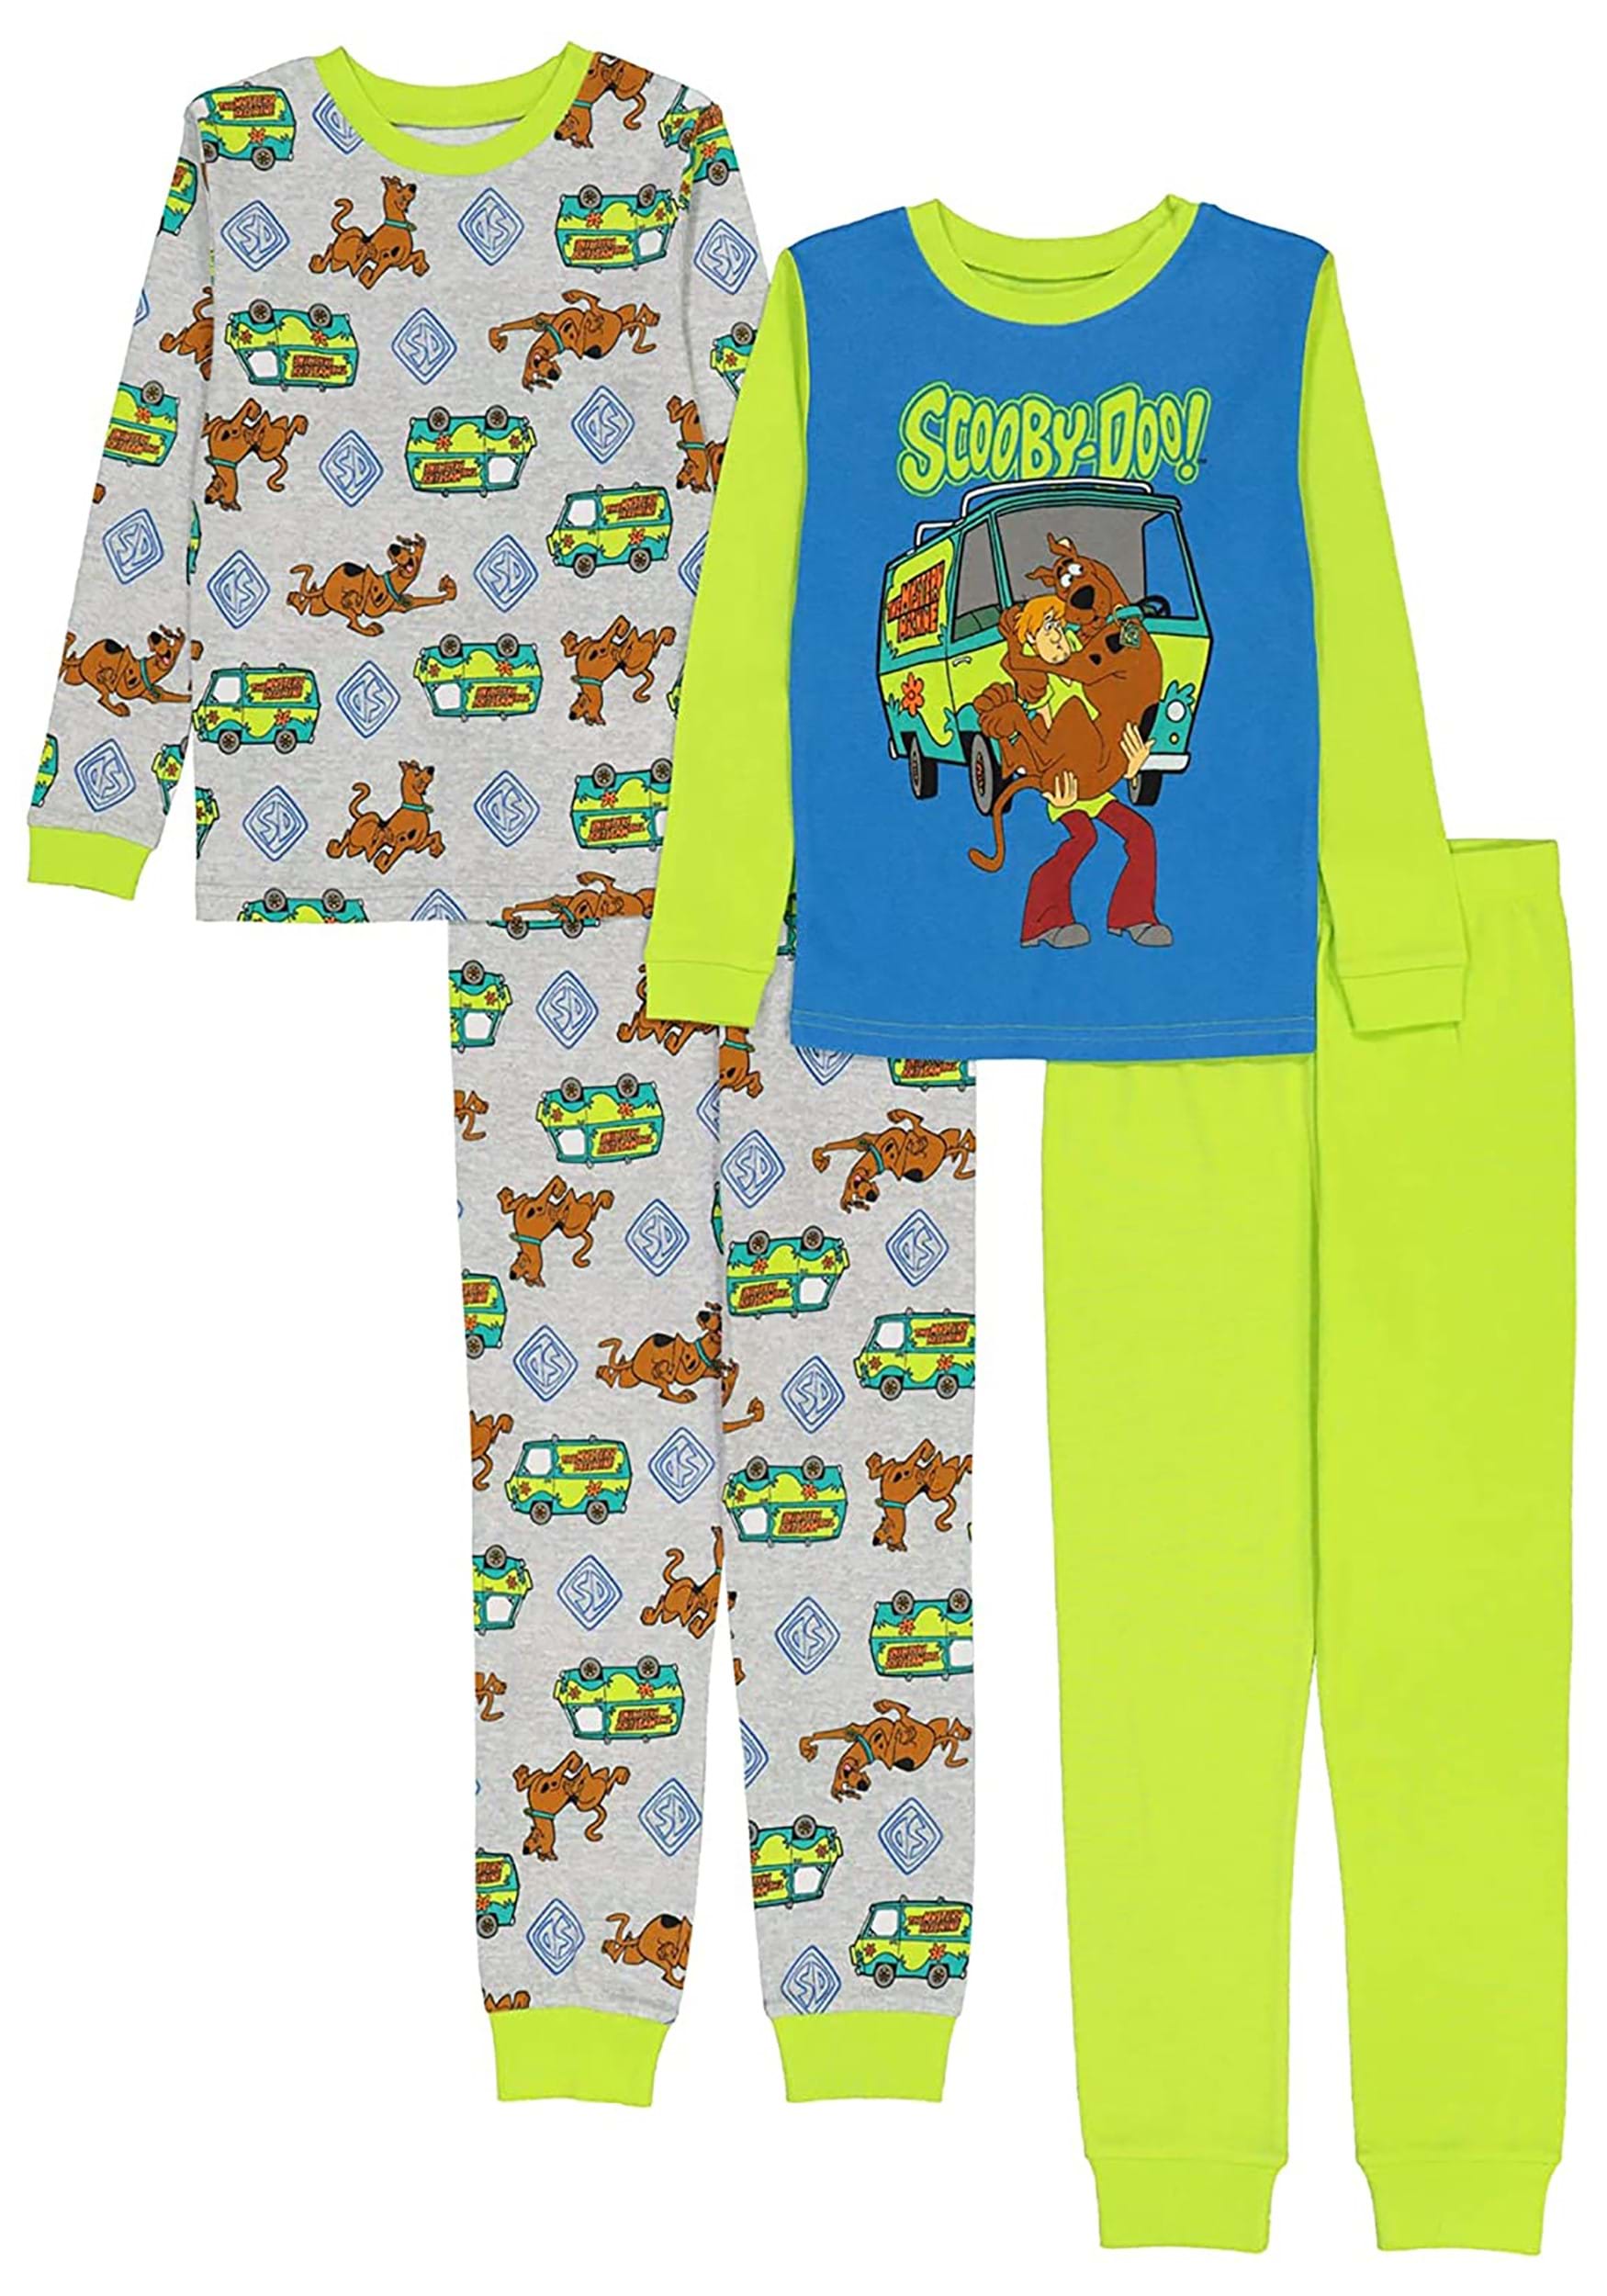 4 Piece Kids Scooby Doo Sleep Set